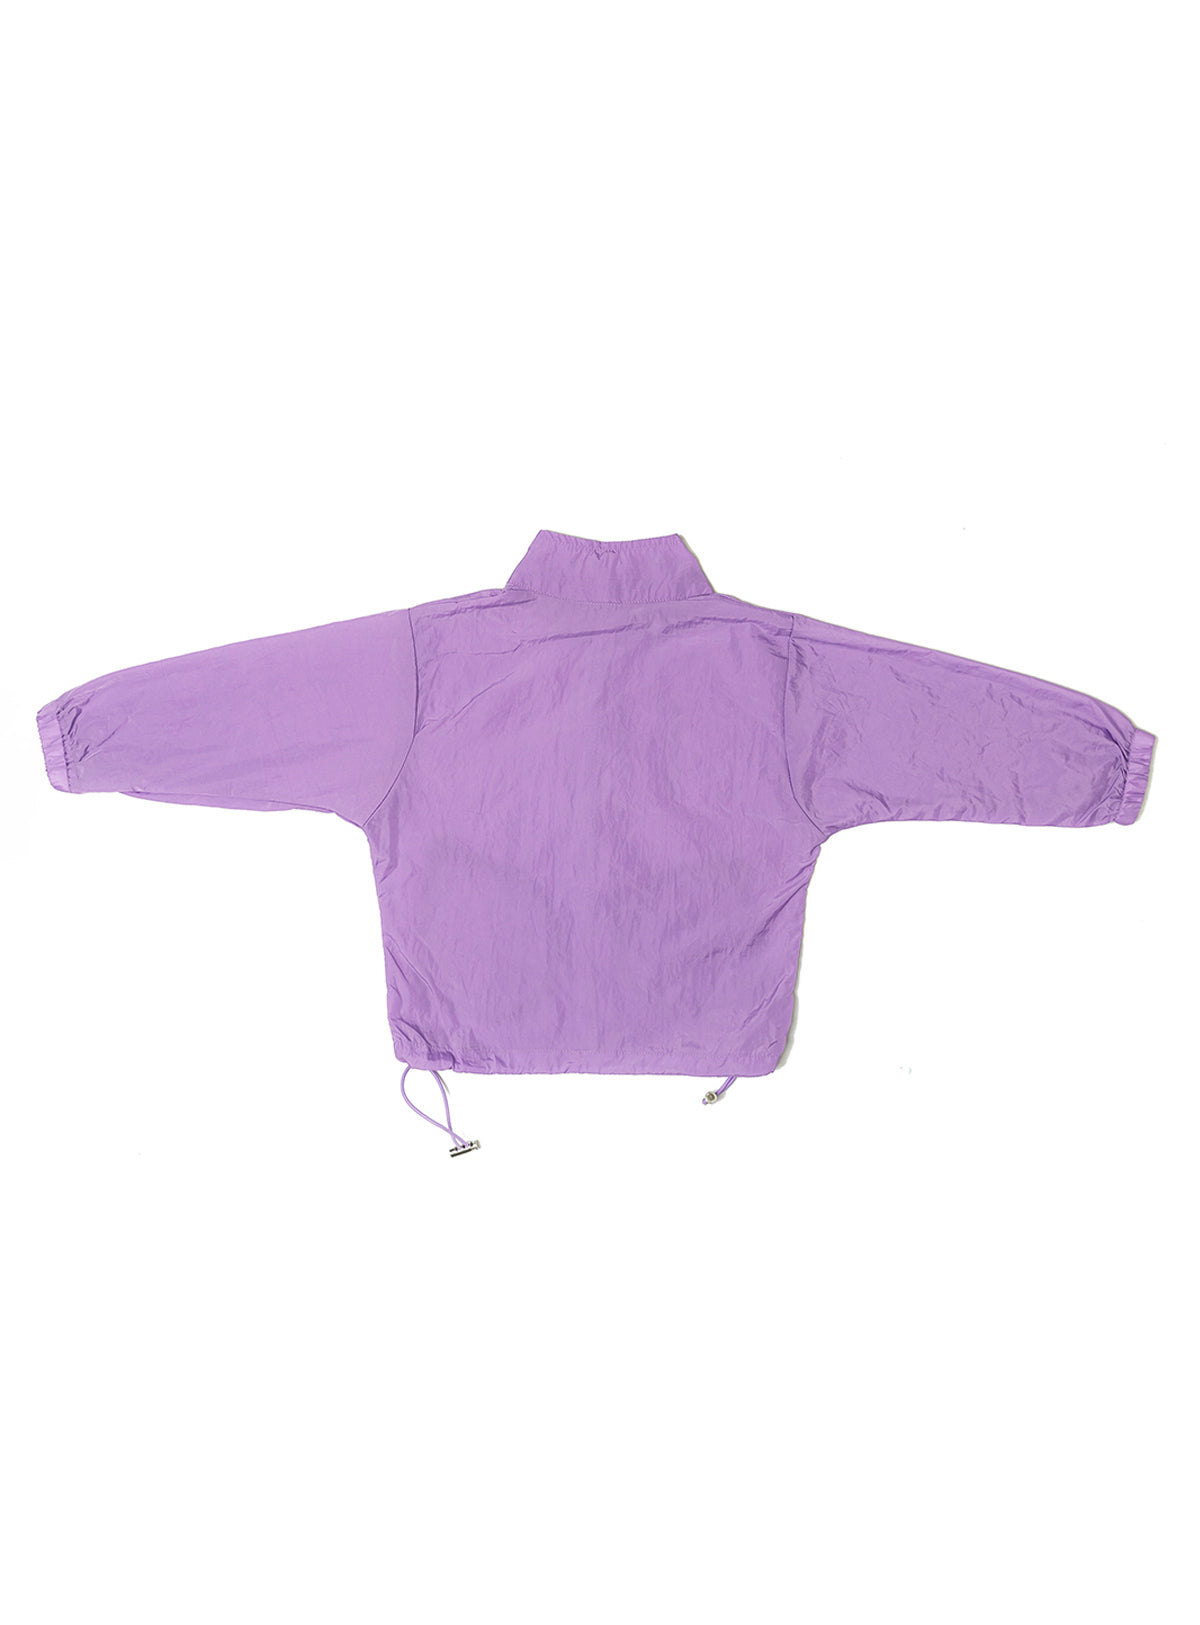 lilac waterproof lightweight jacket